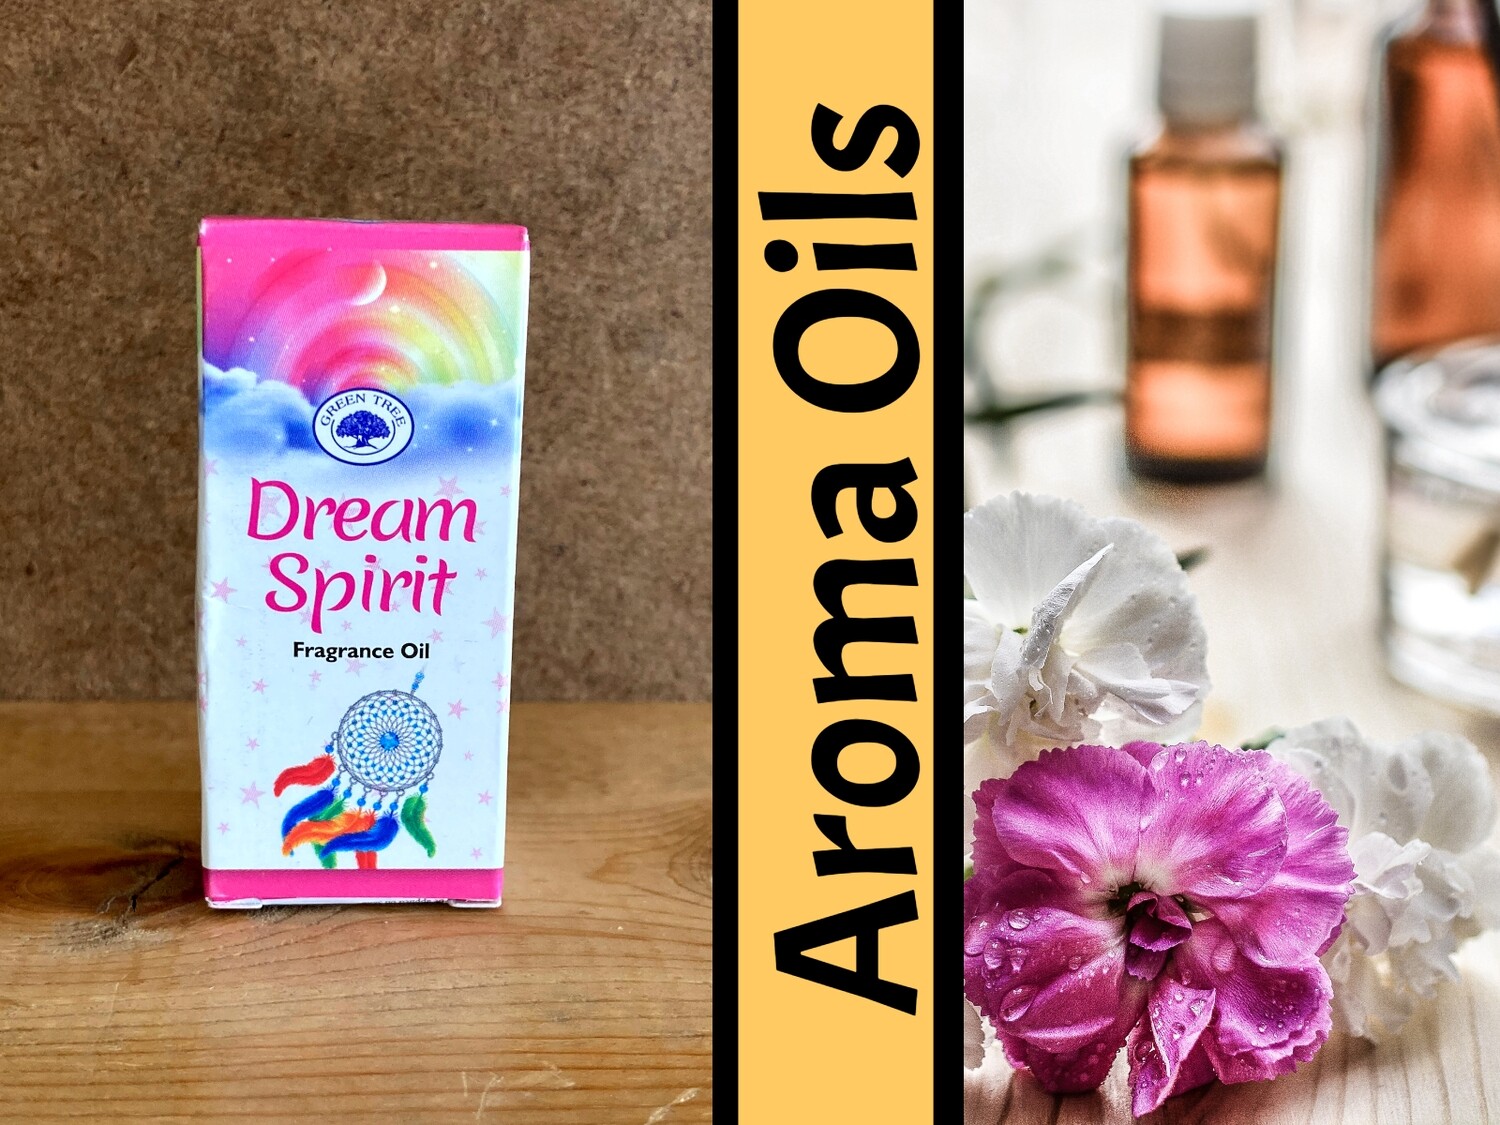 Dream spirit Aroma oil